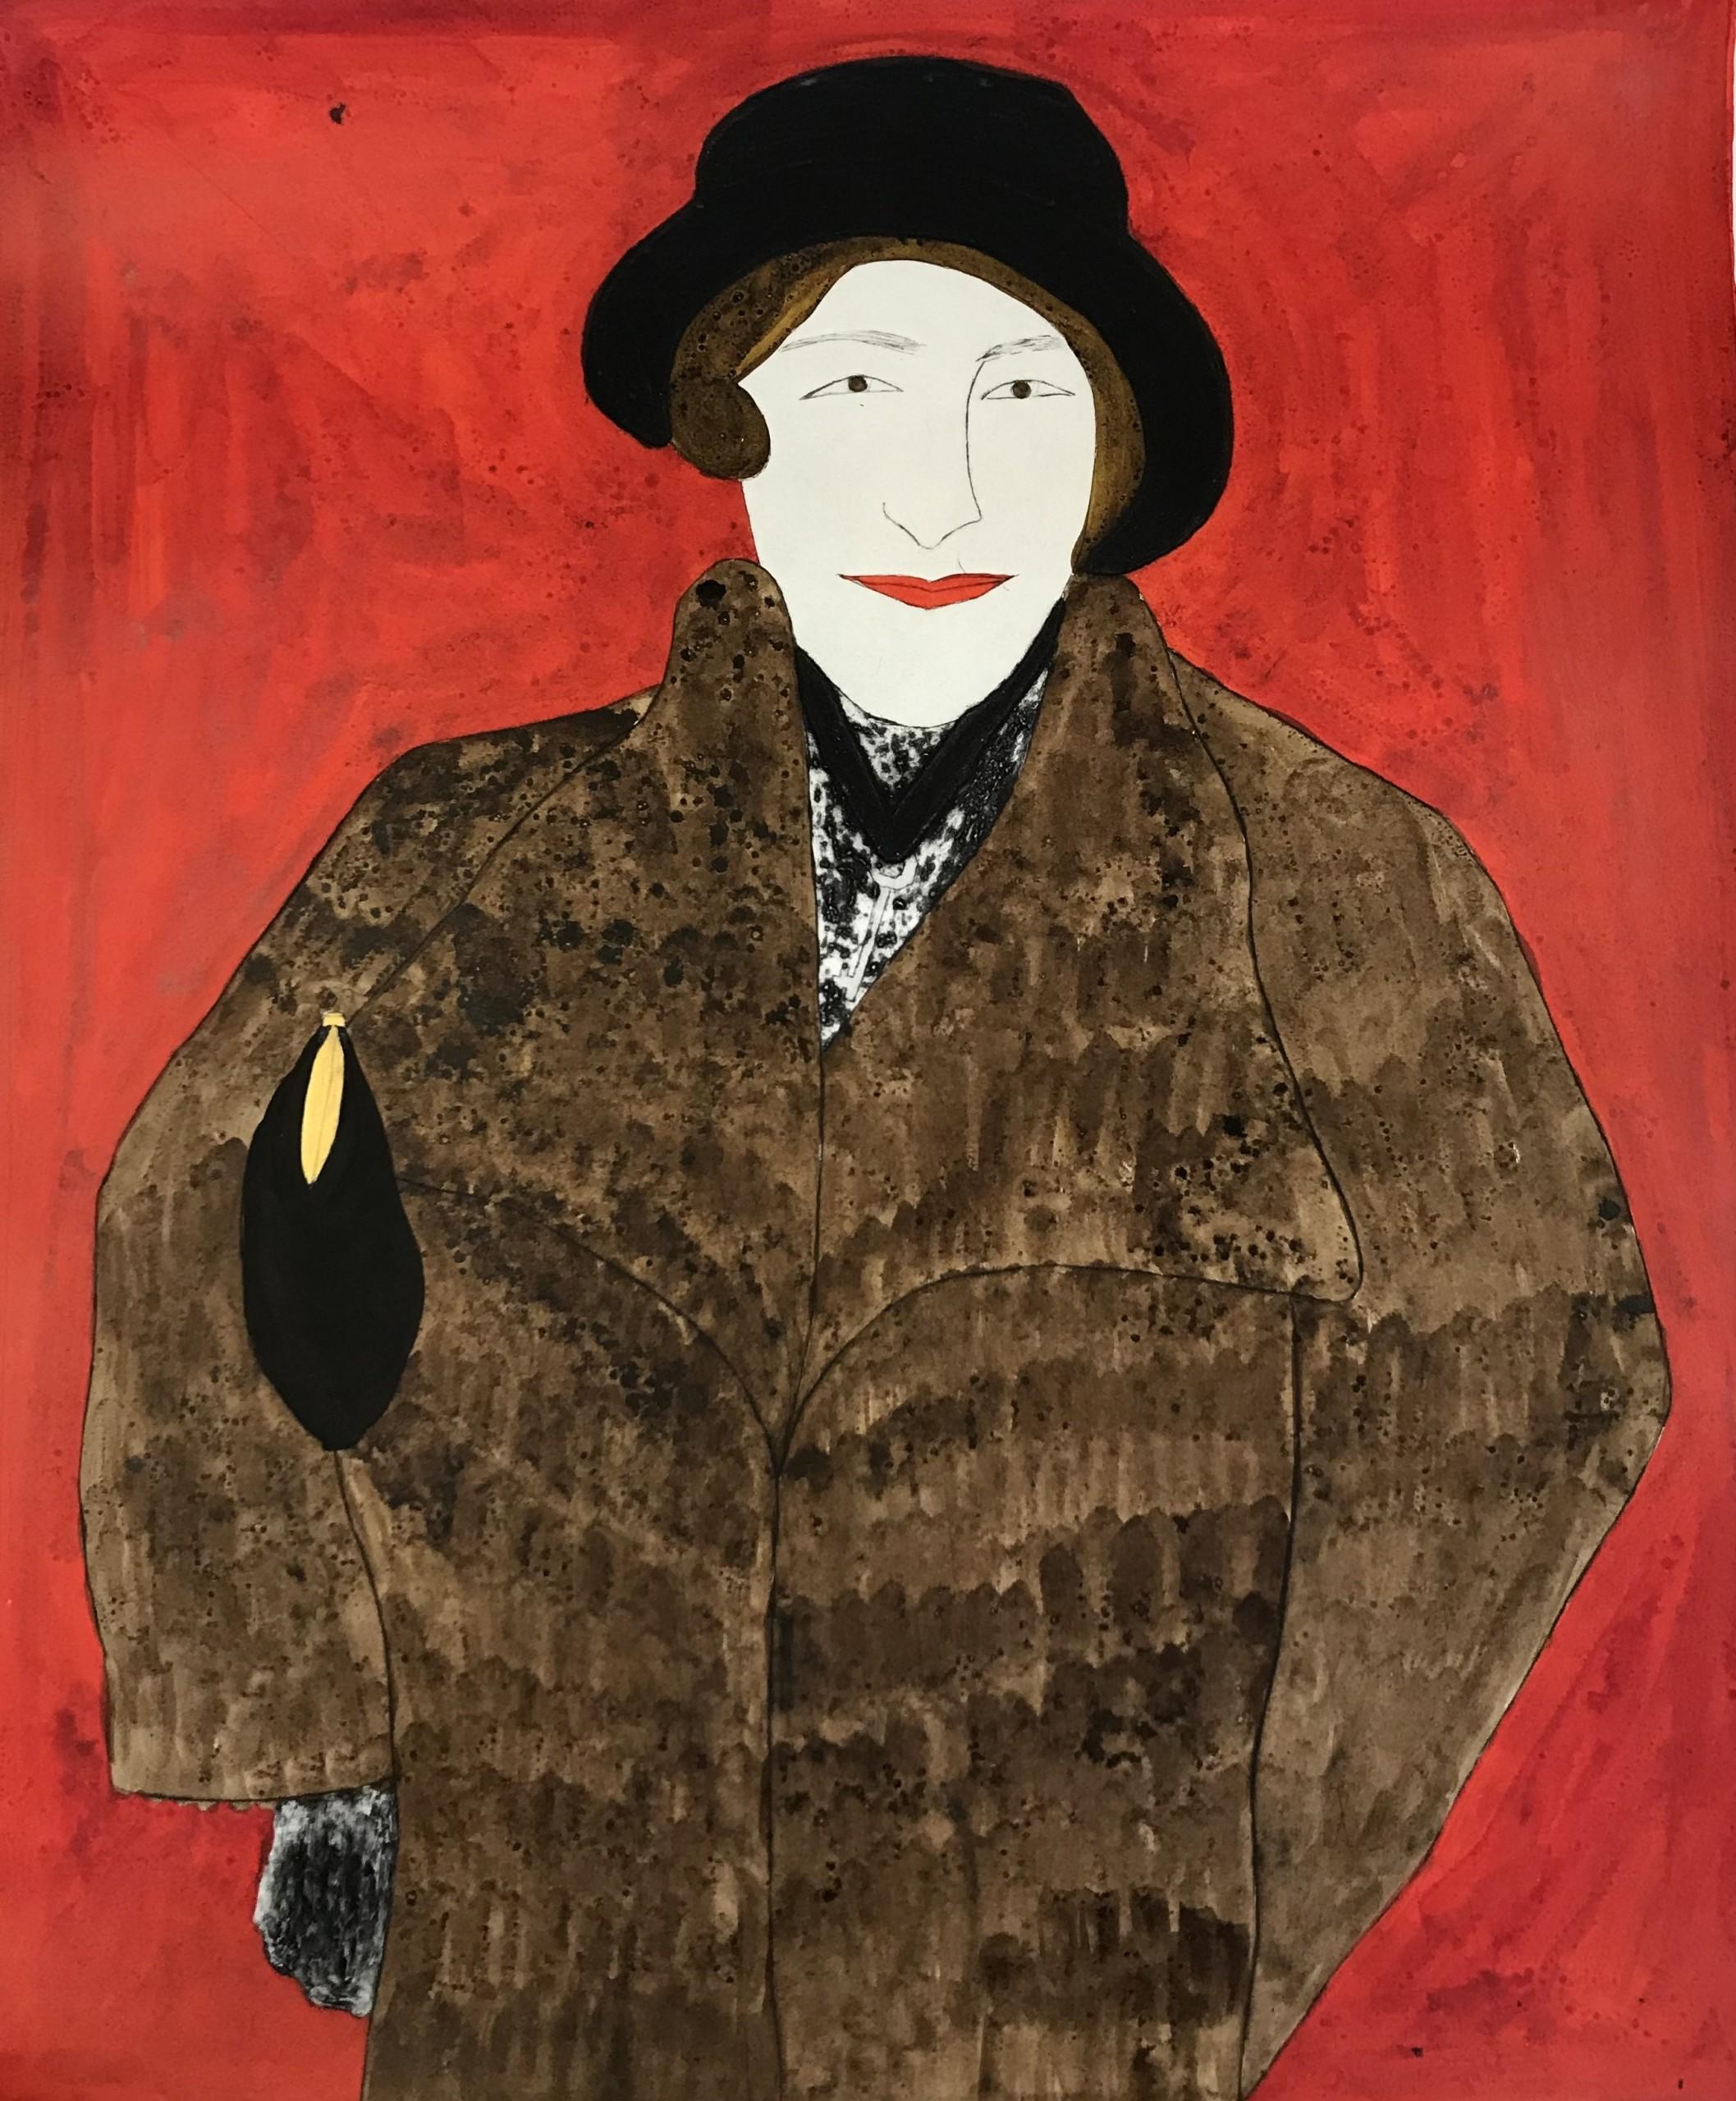 Animal Print Kate Boxer  - Agatha Christie, Mixed media Art print, Littérature, Dramaturge, Personnages célèbres